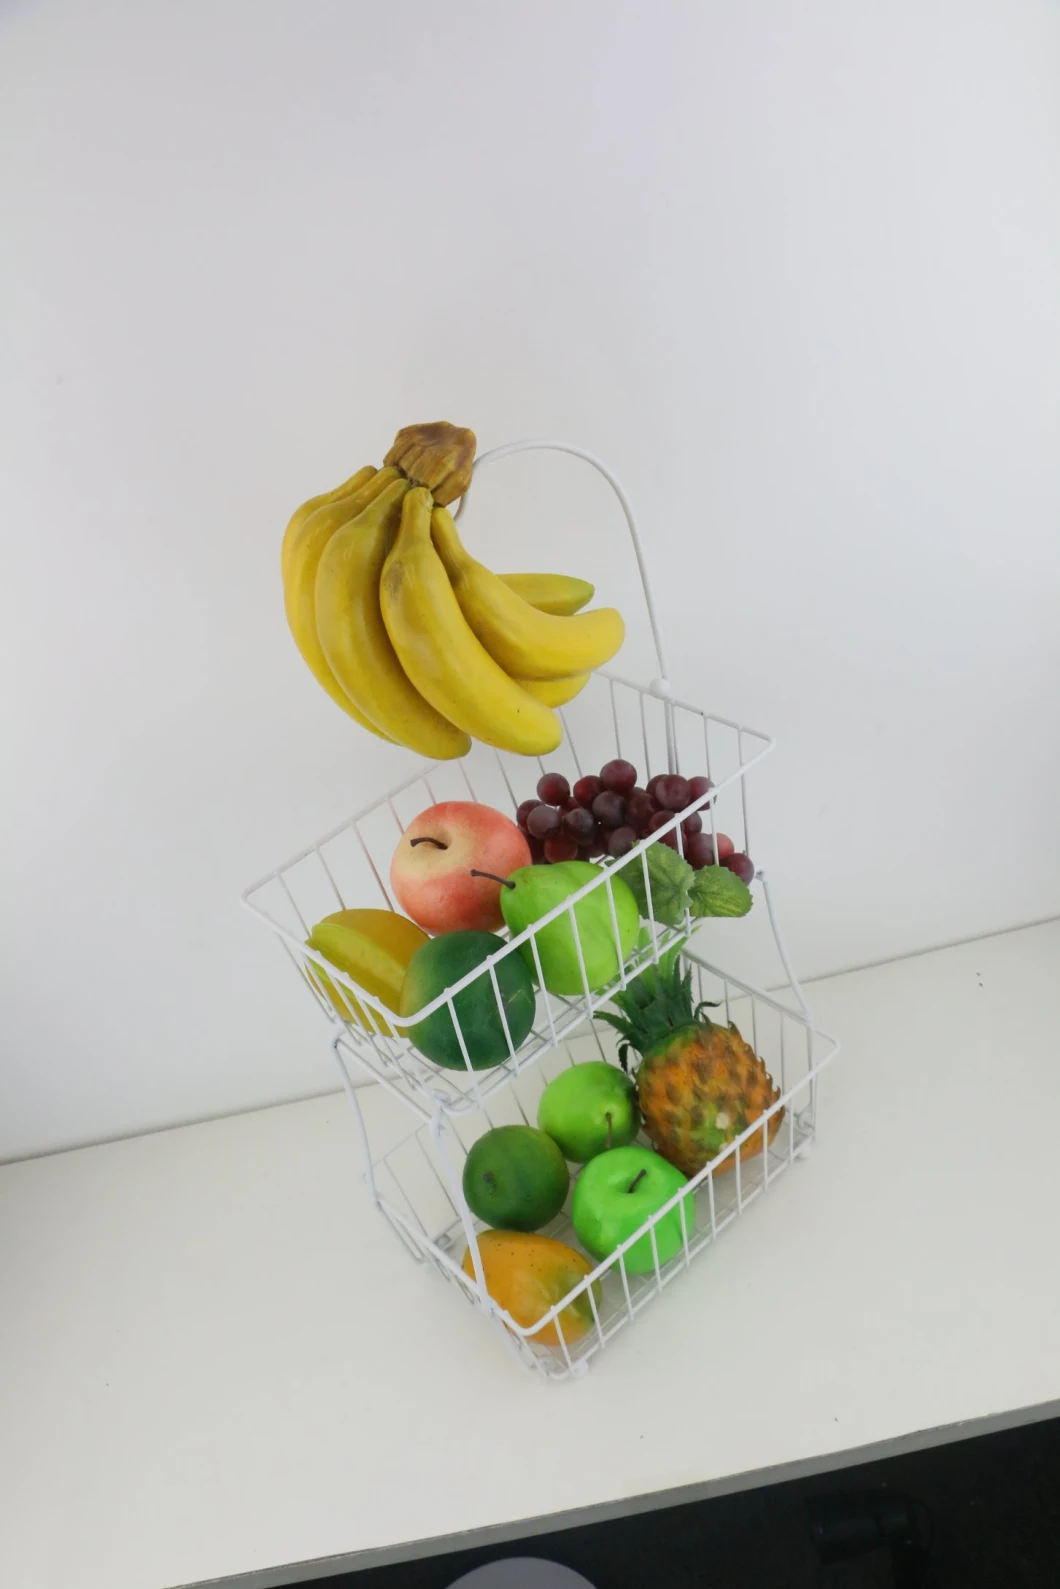 Powder Coat White Banana Hook Living Countertop Home Decor 2-Tier Fruit Basket